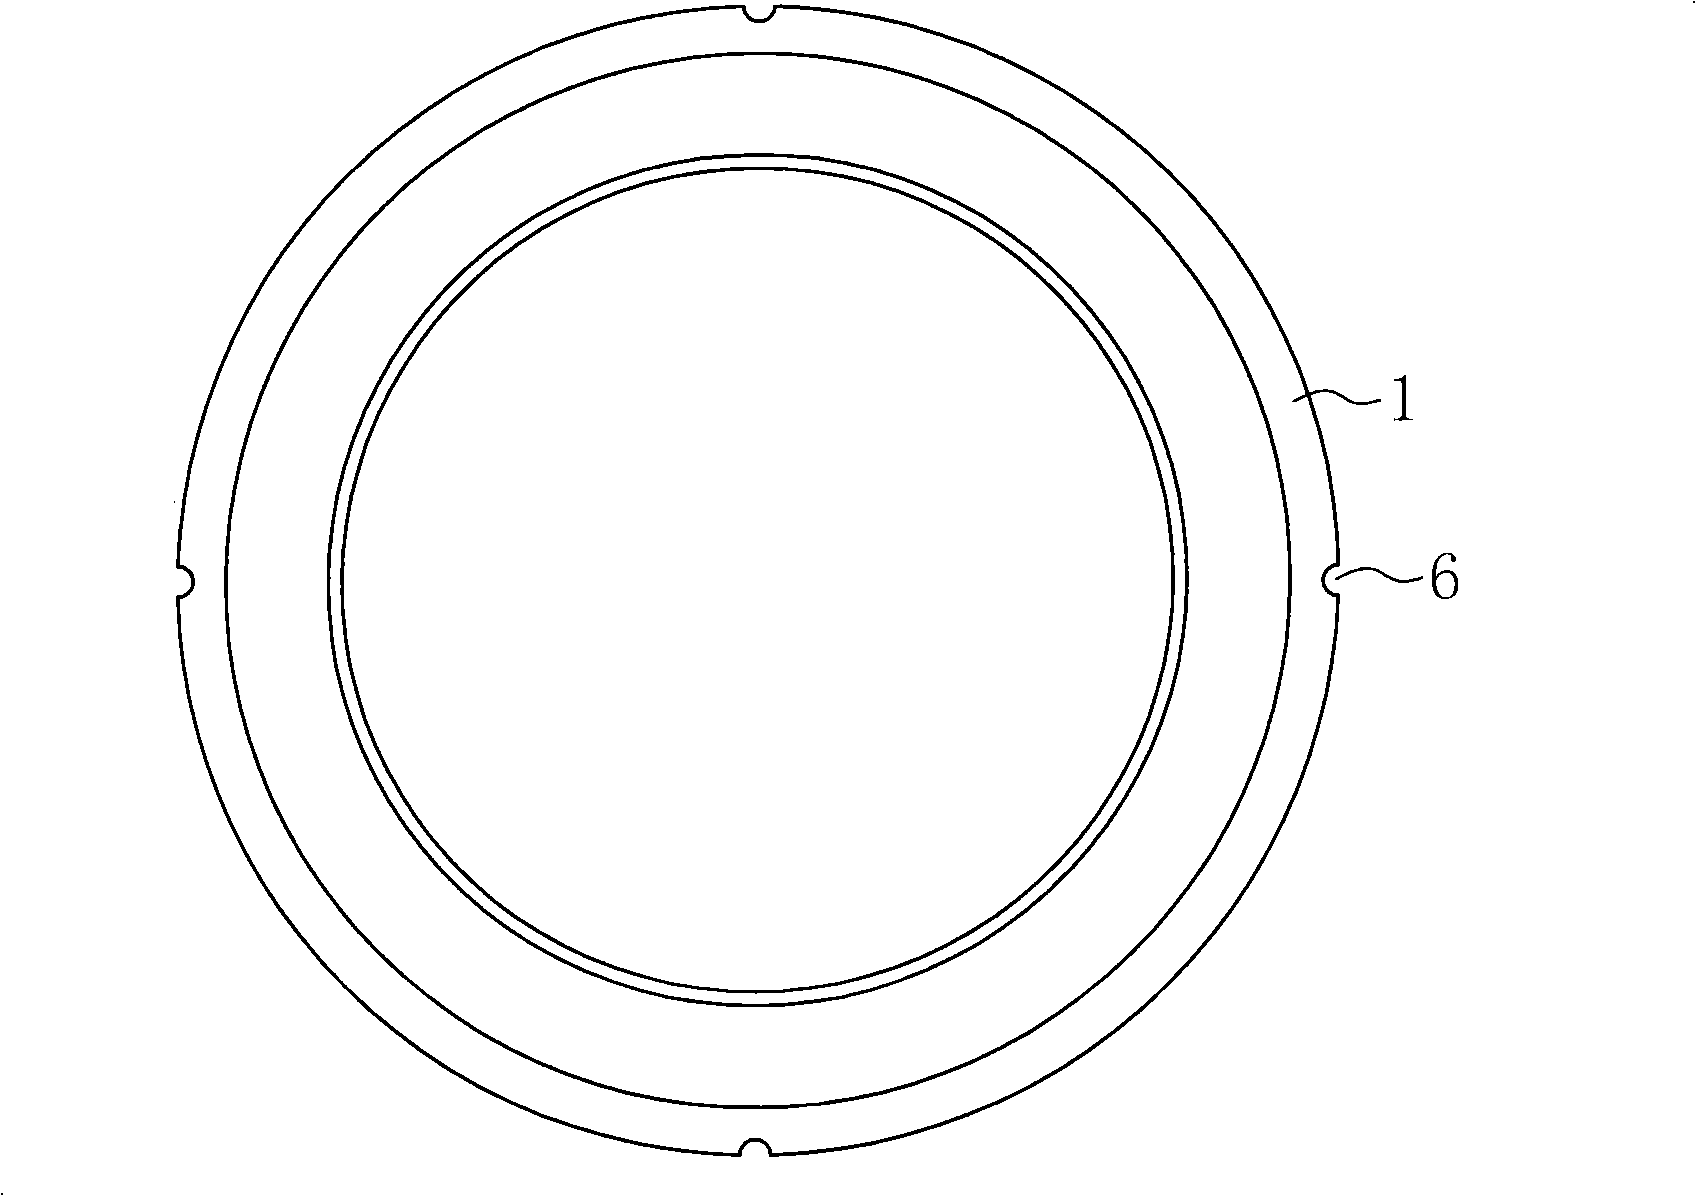 Valve seat structure of self-decompression ball valve